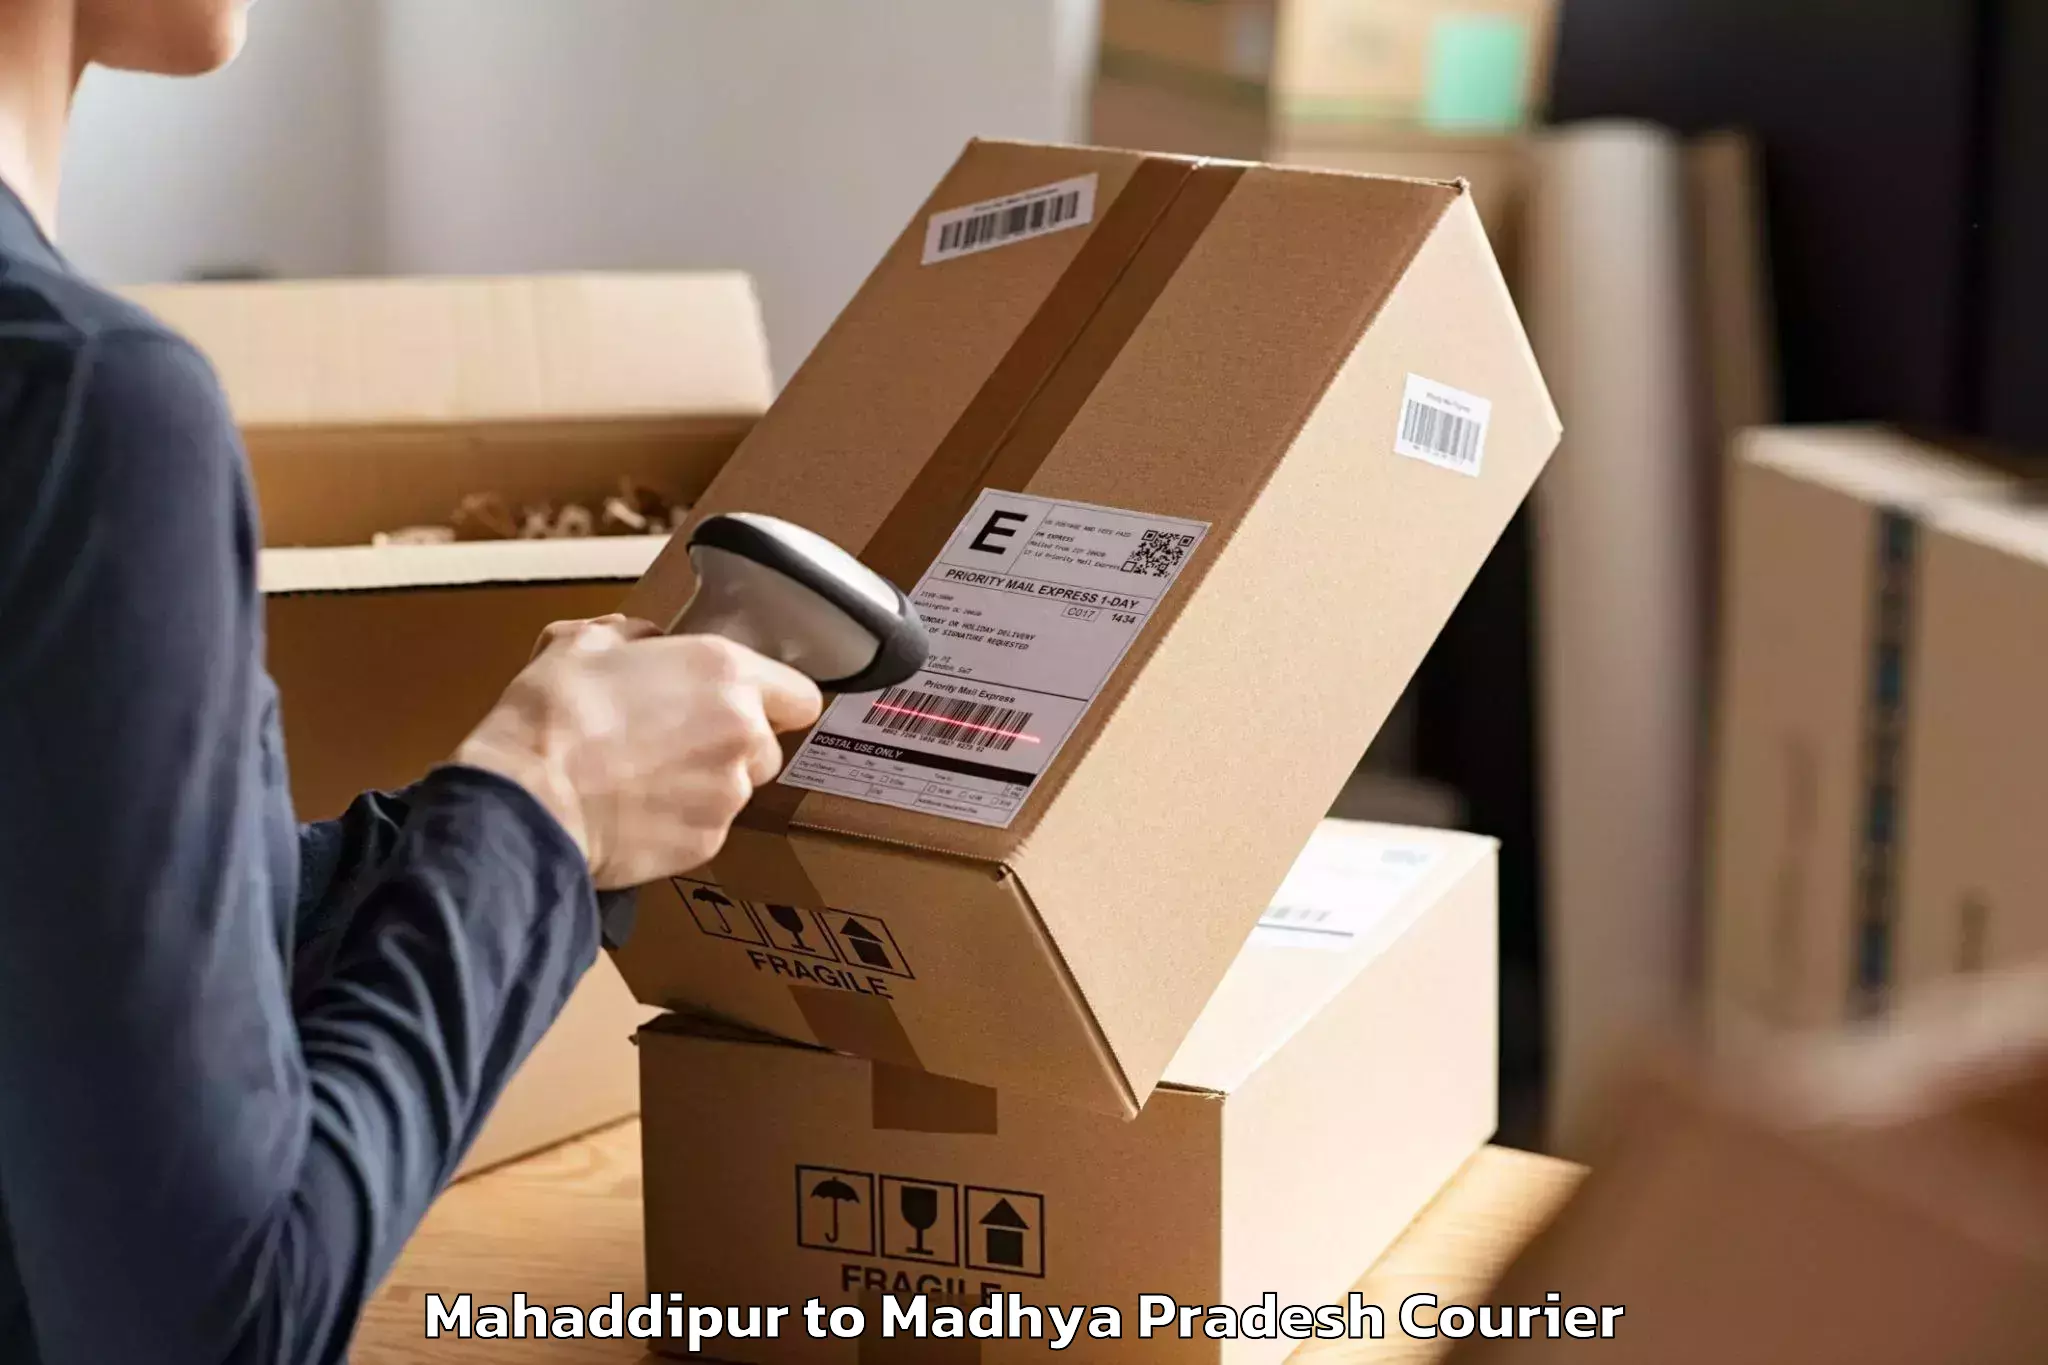 Skilled furniture transporters Mahaddipur to Dola